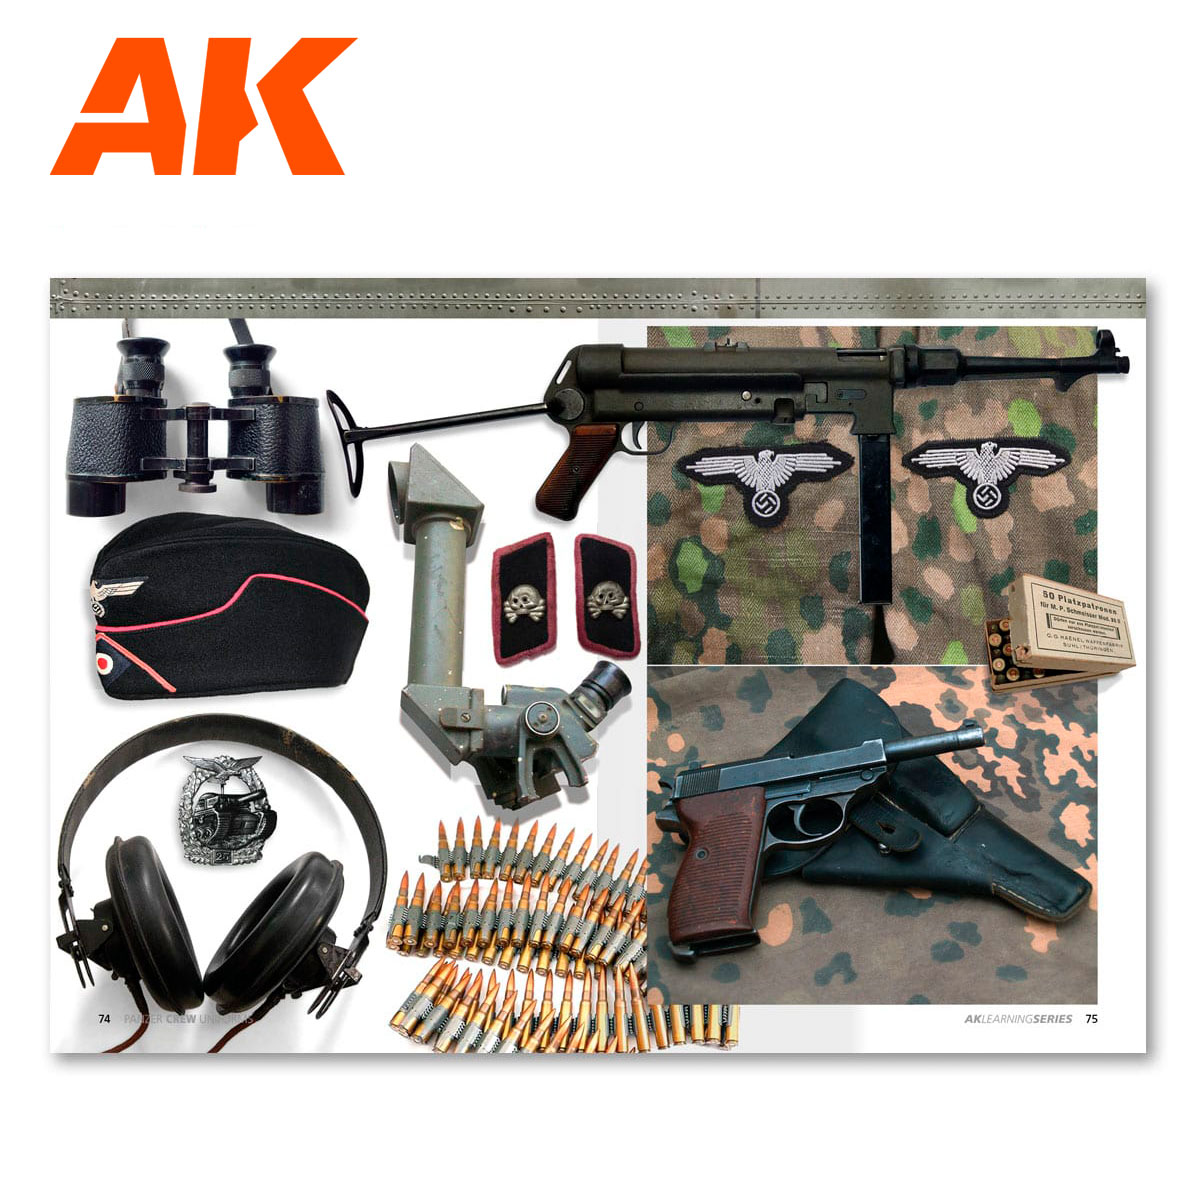 AK Learning Series: 02 - Panzer Crew Uniforms